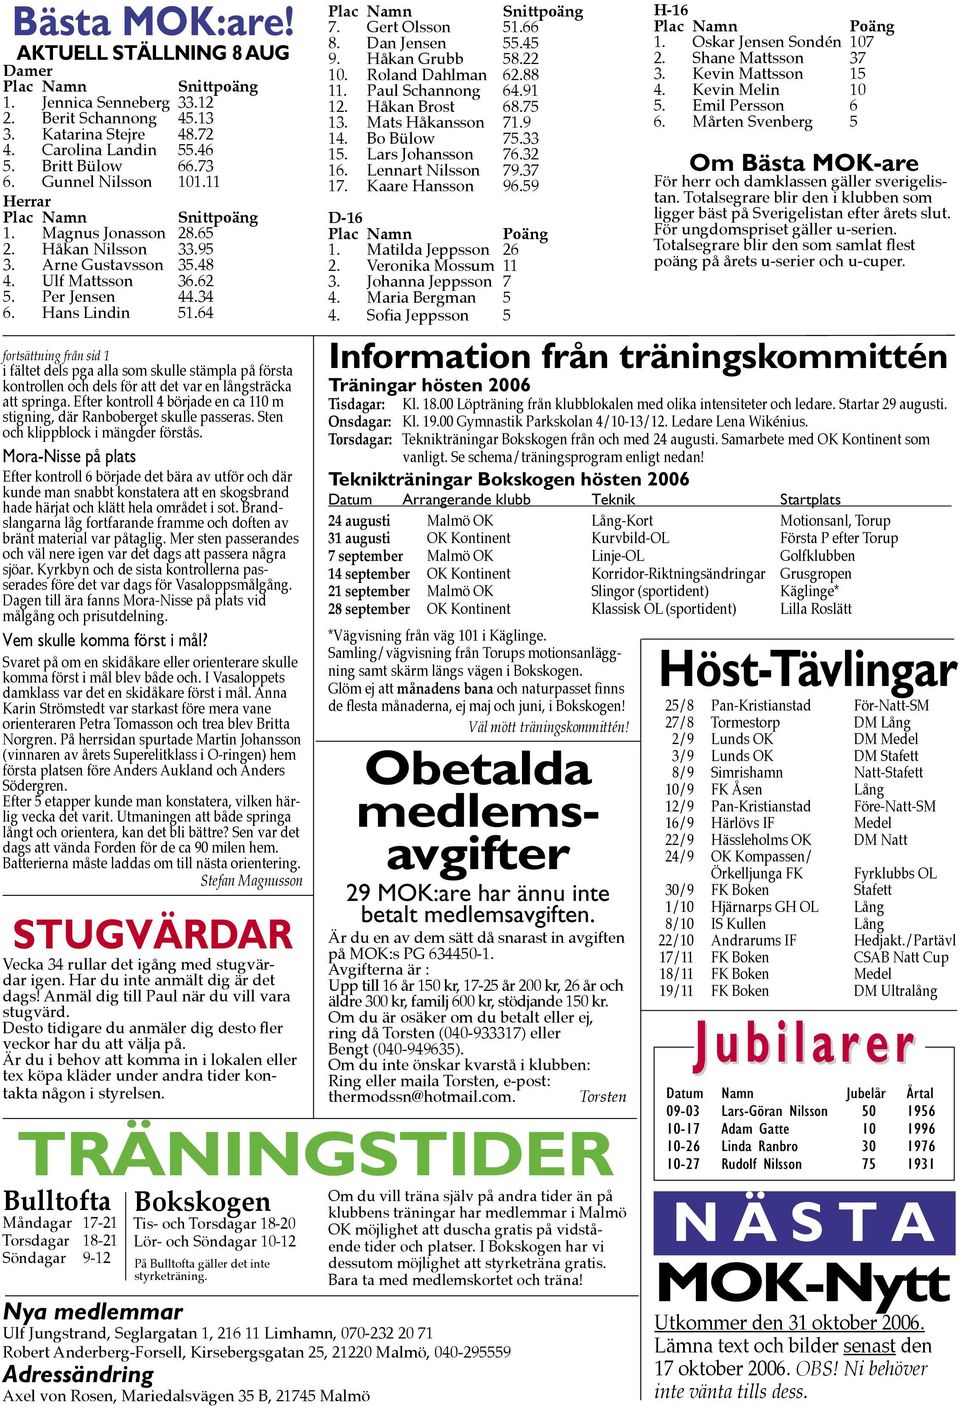 Arne Gustavsson 35.48 4. Ulf Mattsson 36.62 5. Per Jensen 44.34 6. Hans Lindin 51.